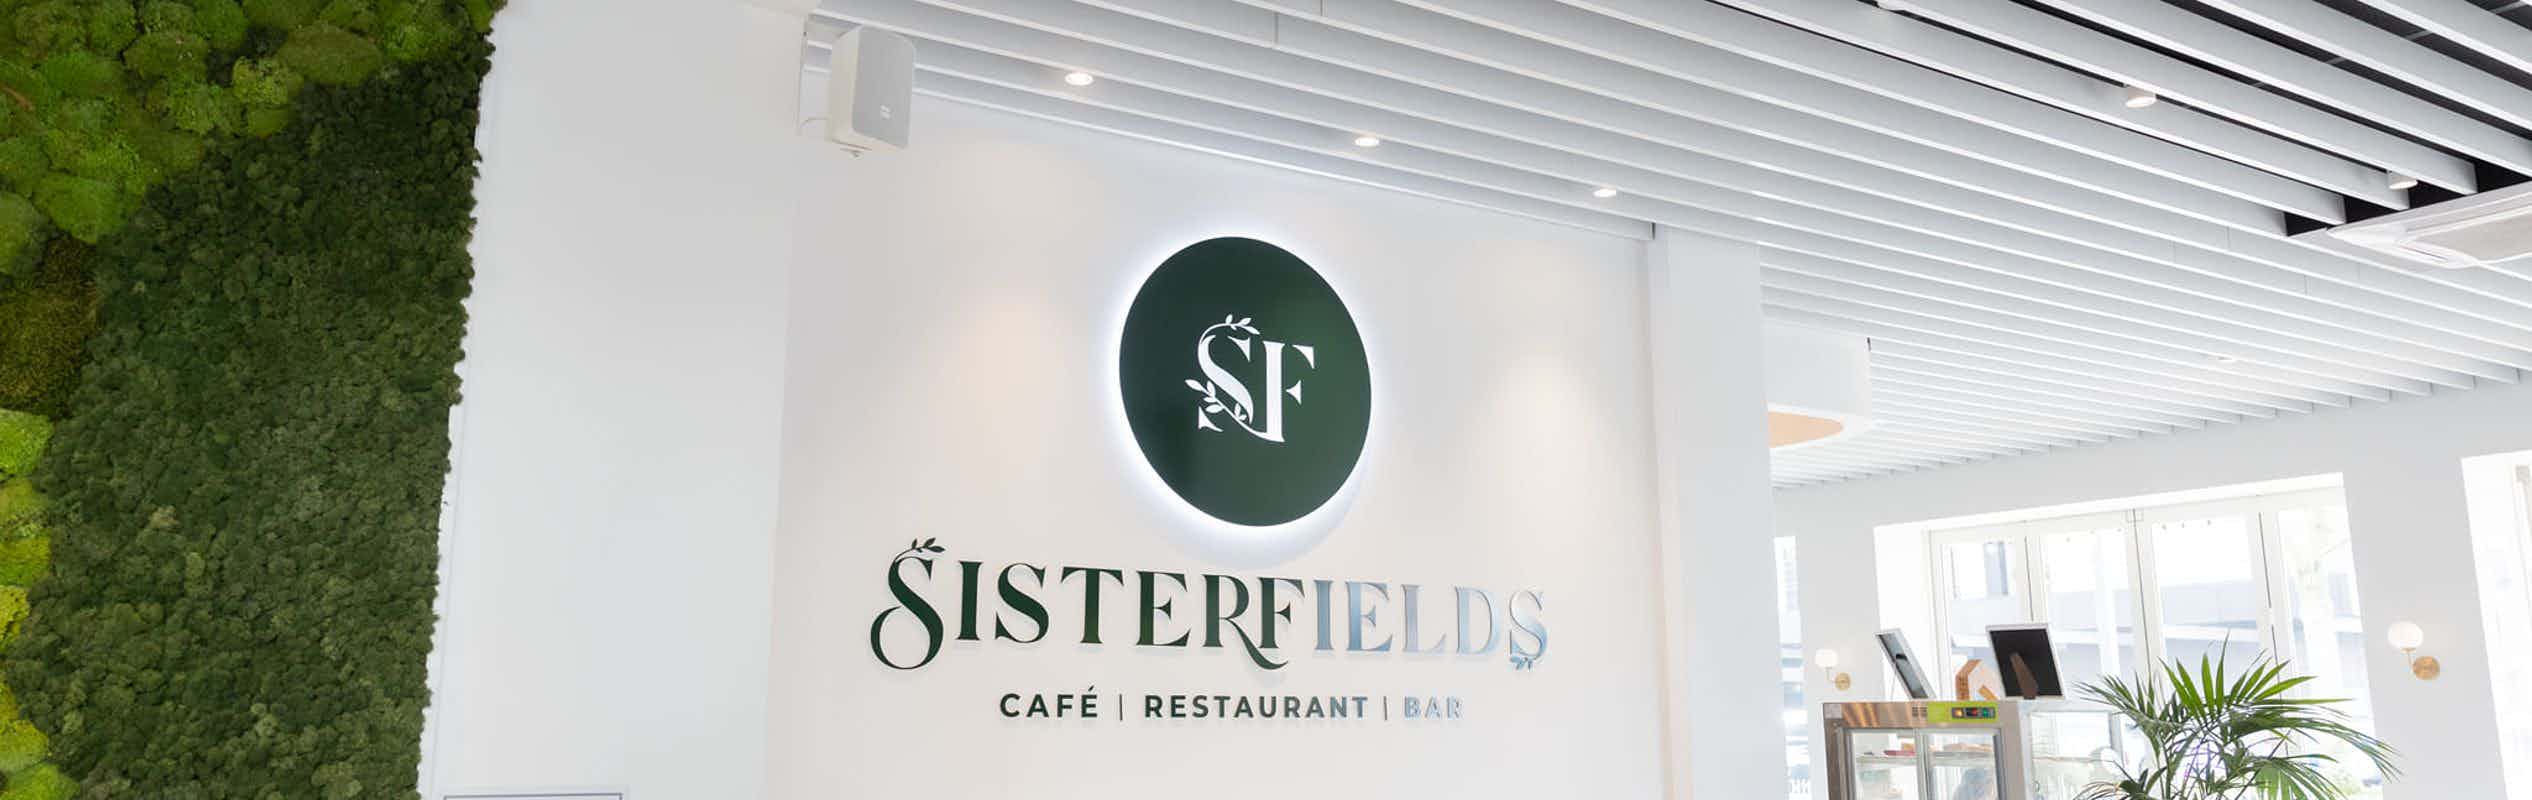 Enjoy International cuisine at Sisterfields in Hamilton Central, Waikato